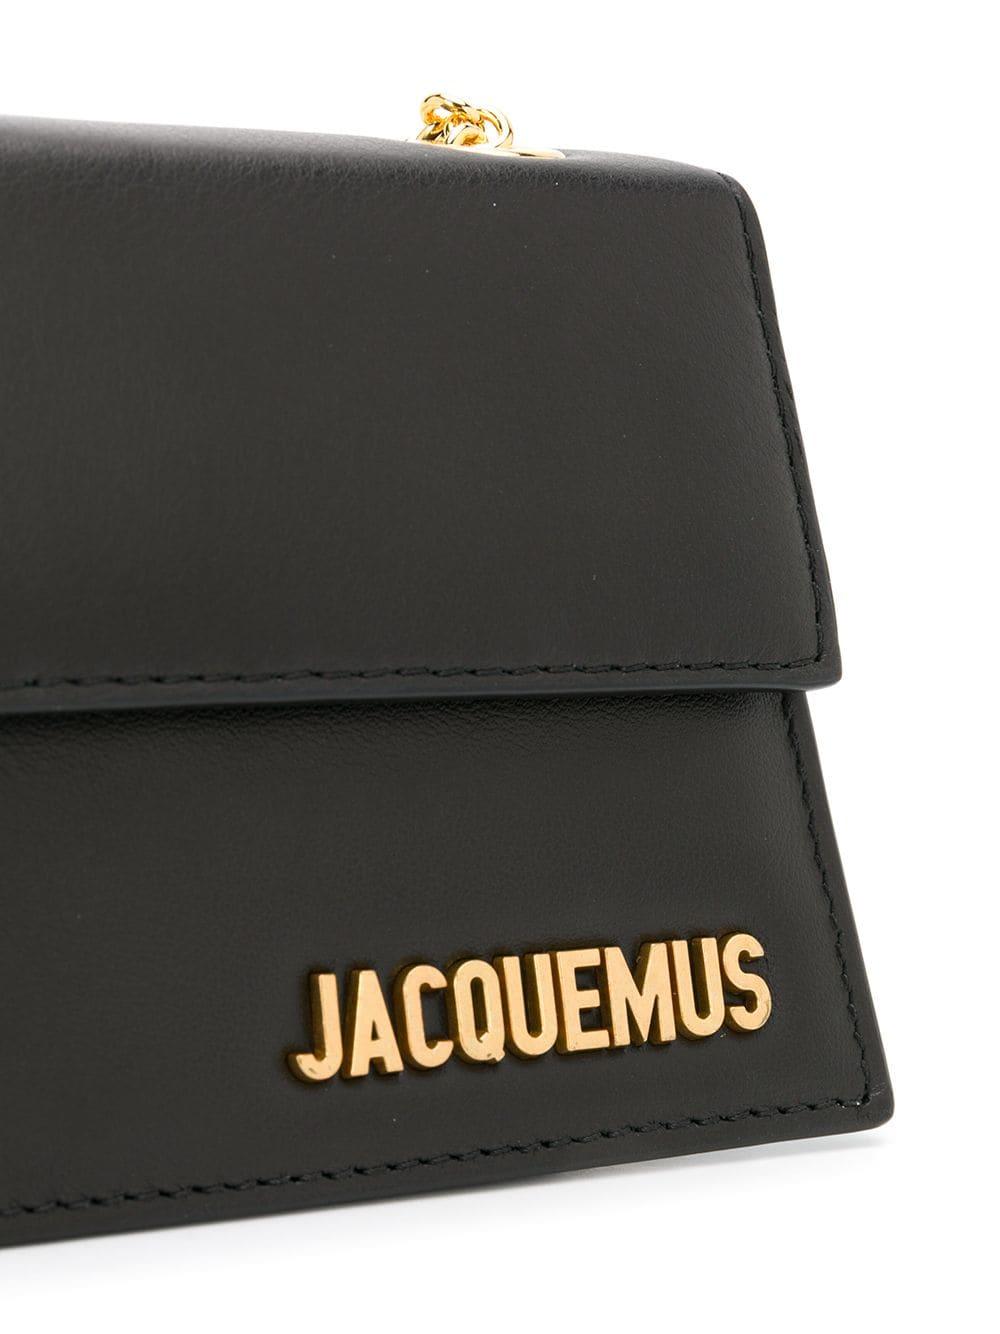 Jacquemus Mini Chain Cross Body Bag in Black | Lyst